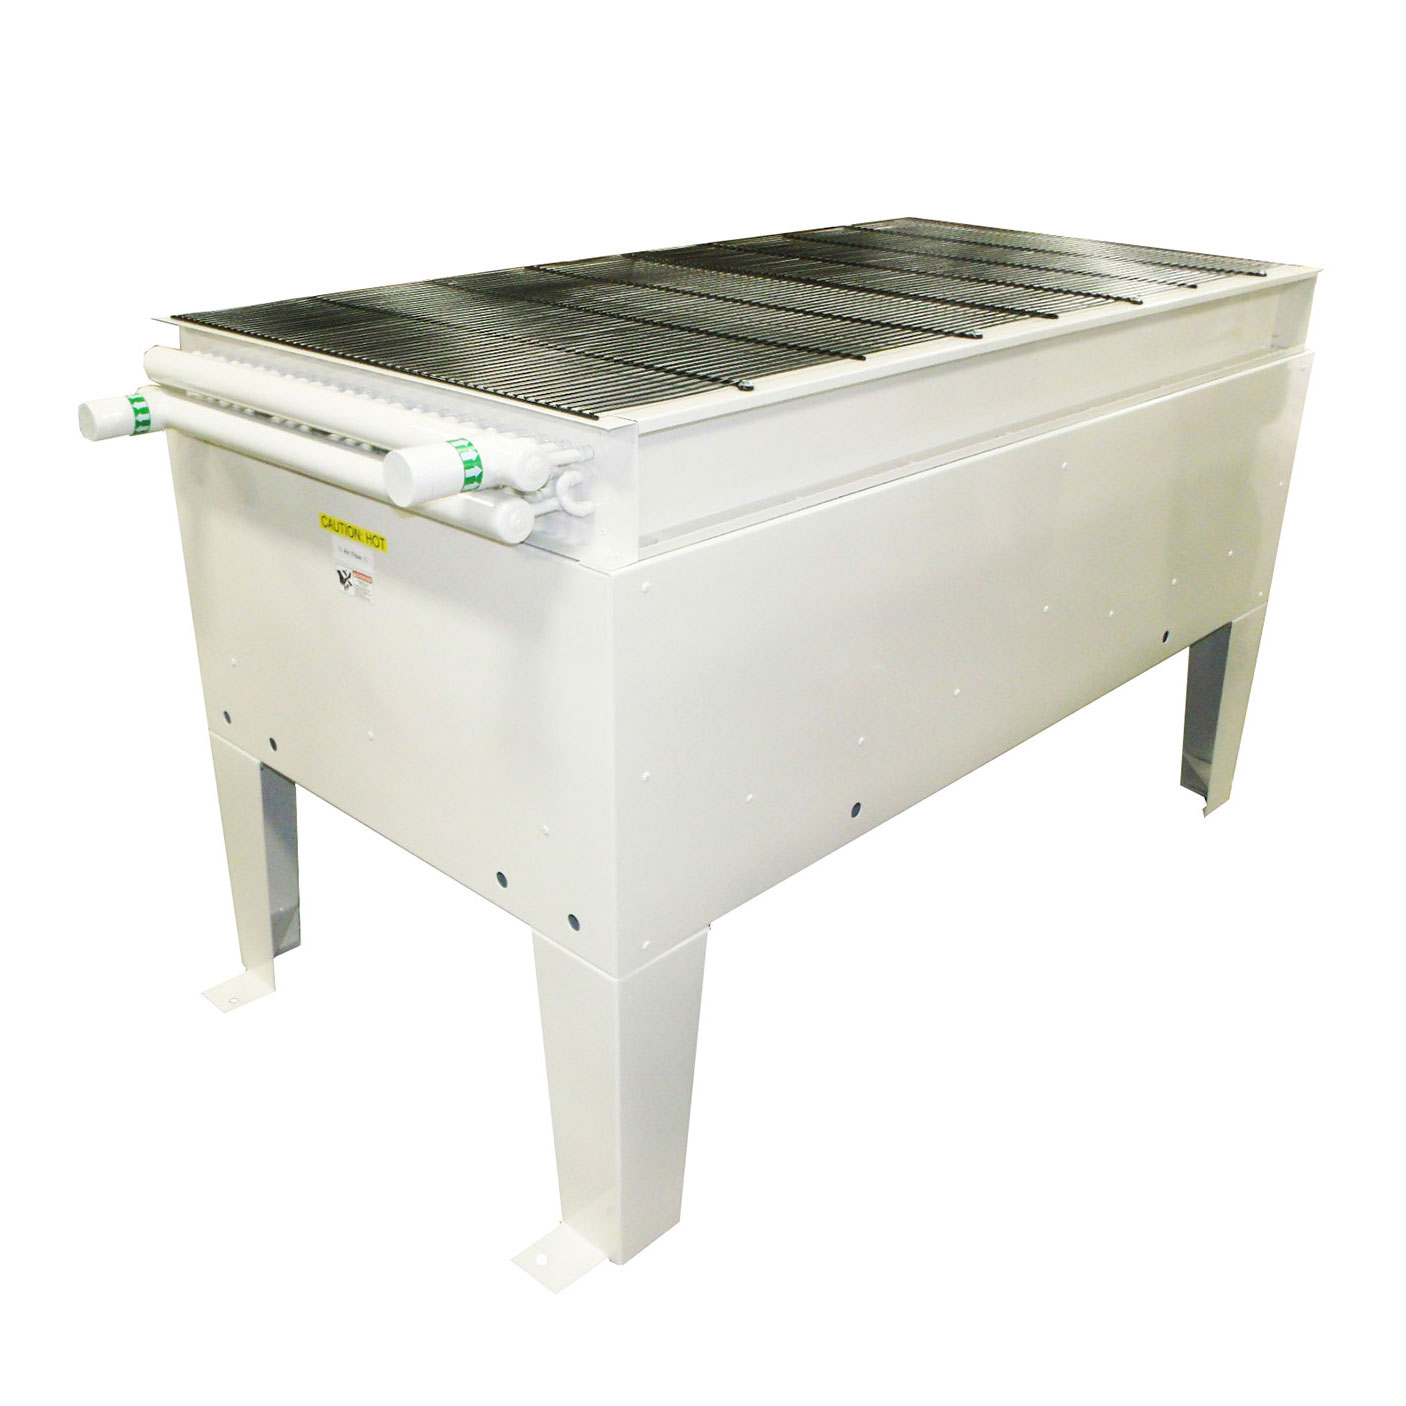 AquaVent AVF Air-Cooled Heat Exchanger